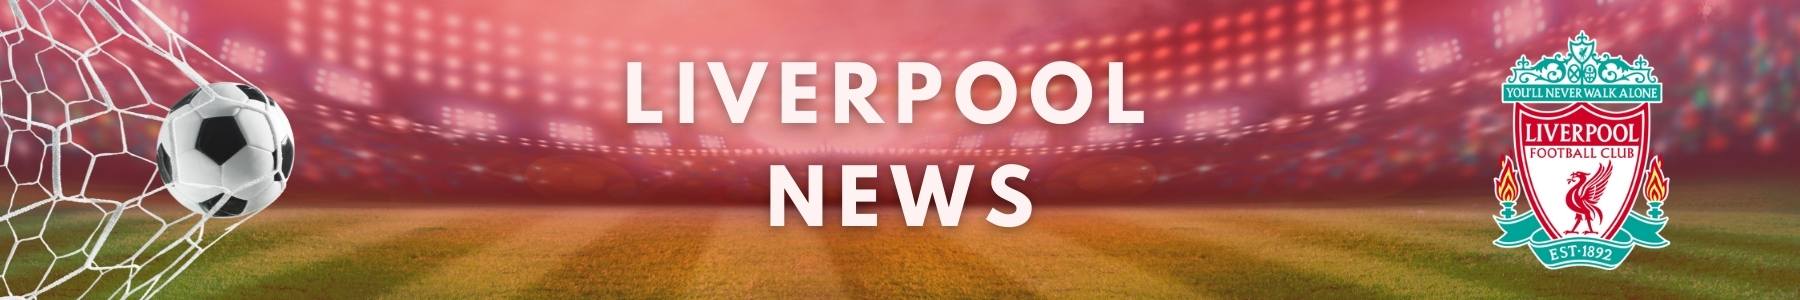 Liverpool - Latest News